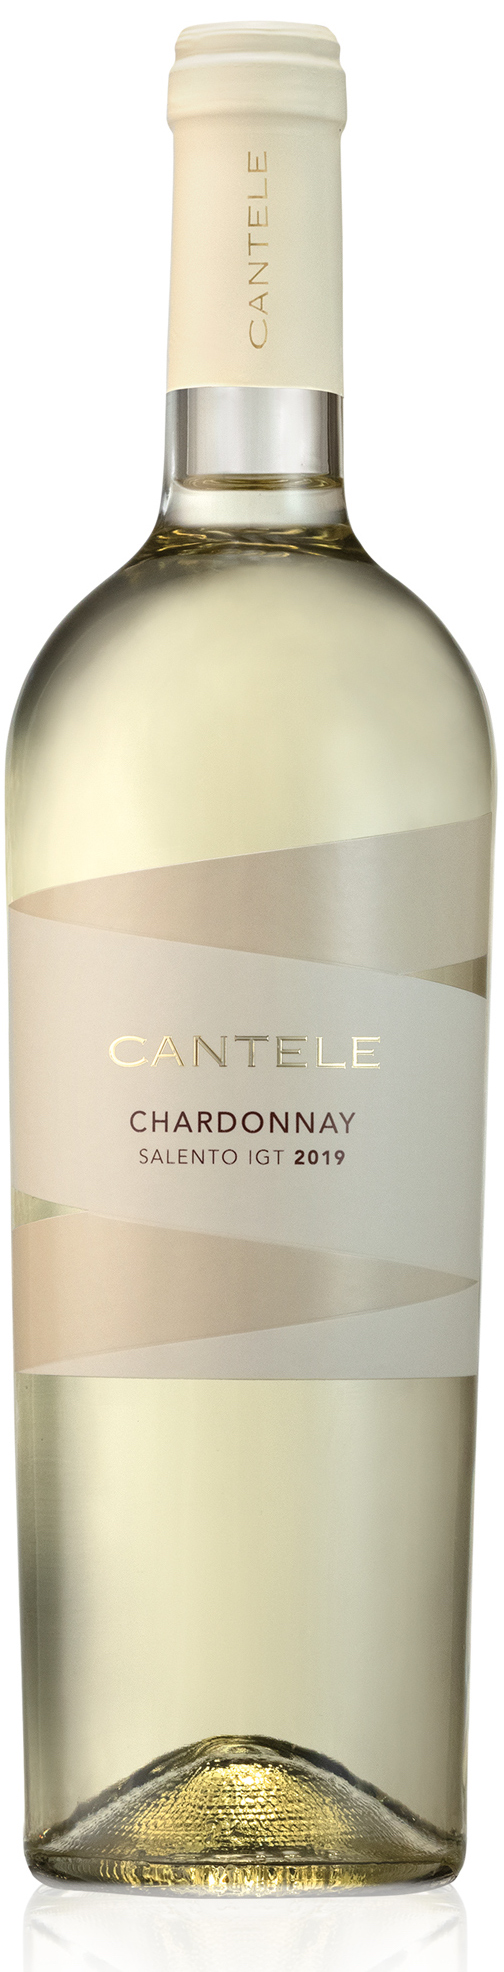 Cantele Chardonnay 2019 750ml